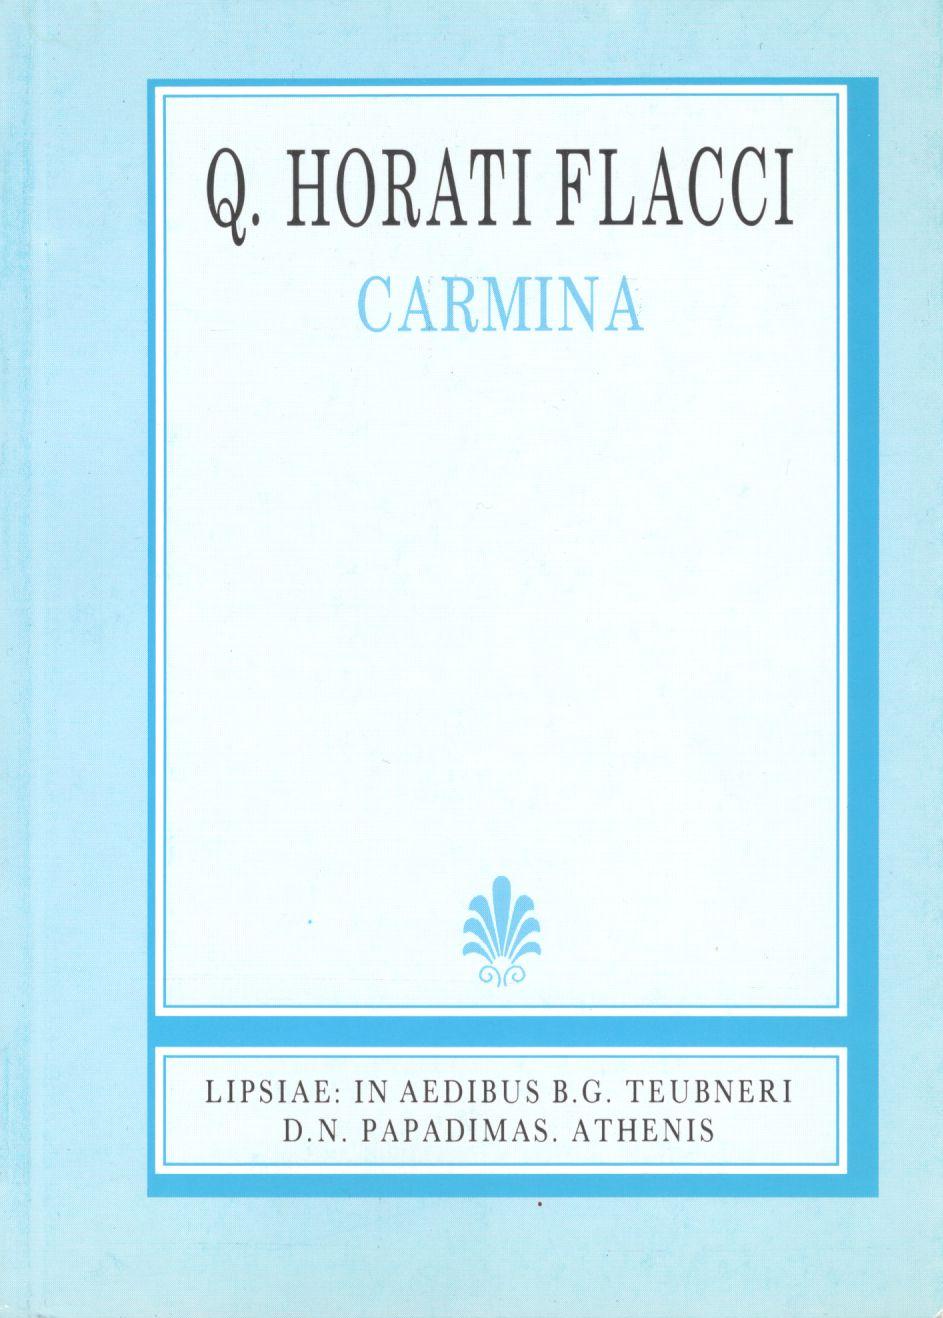 Q. Horati Flacci, Carmina, libri I-IV, [Κοίντου Οράτιου Φλάκκου, Ωδαί βιβλία Α'-Δ']